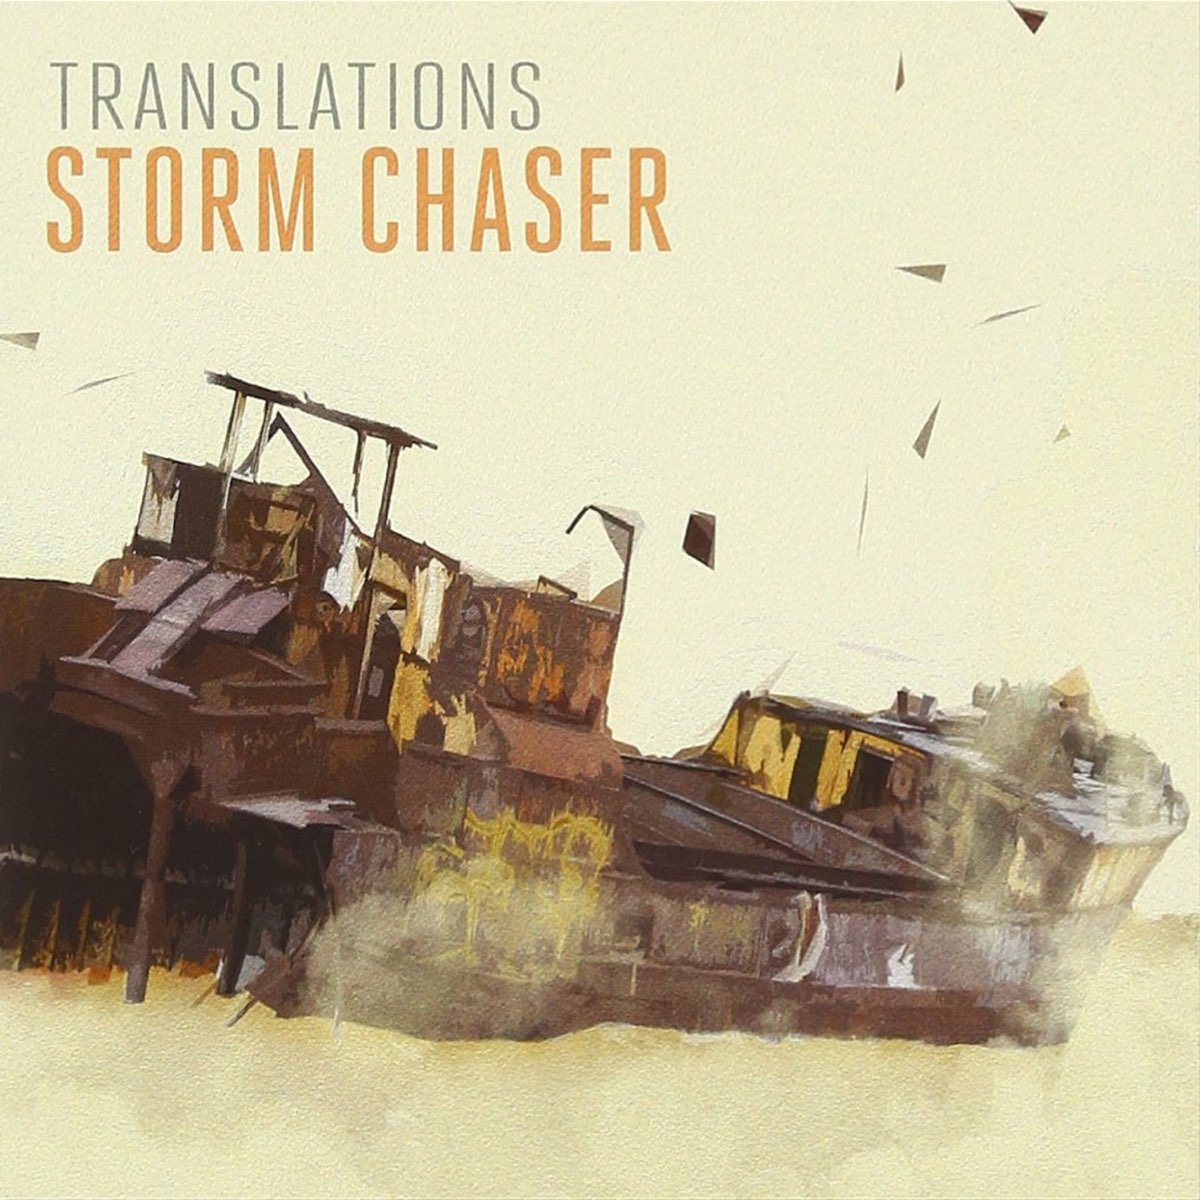 Stormy перевод. Storm Chaser. Штурм и буря обложка. B4 the Storm обложка. Обложка шторм для песни.